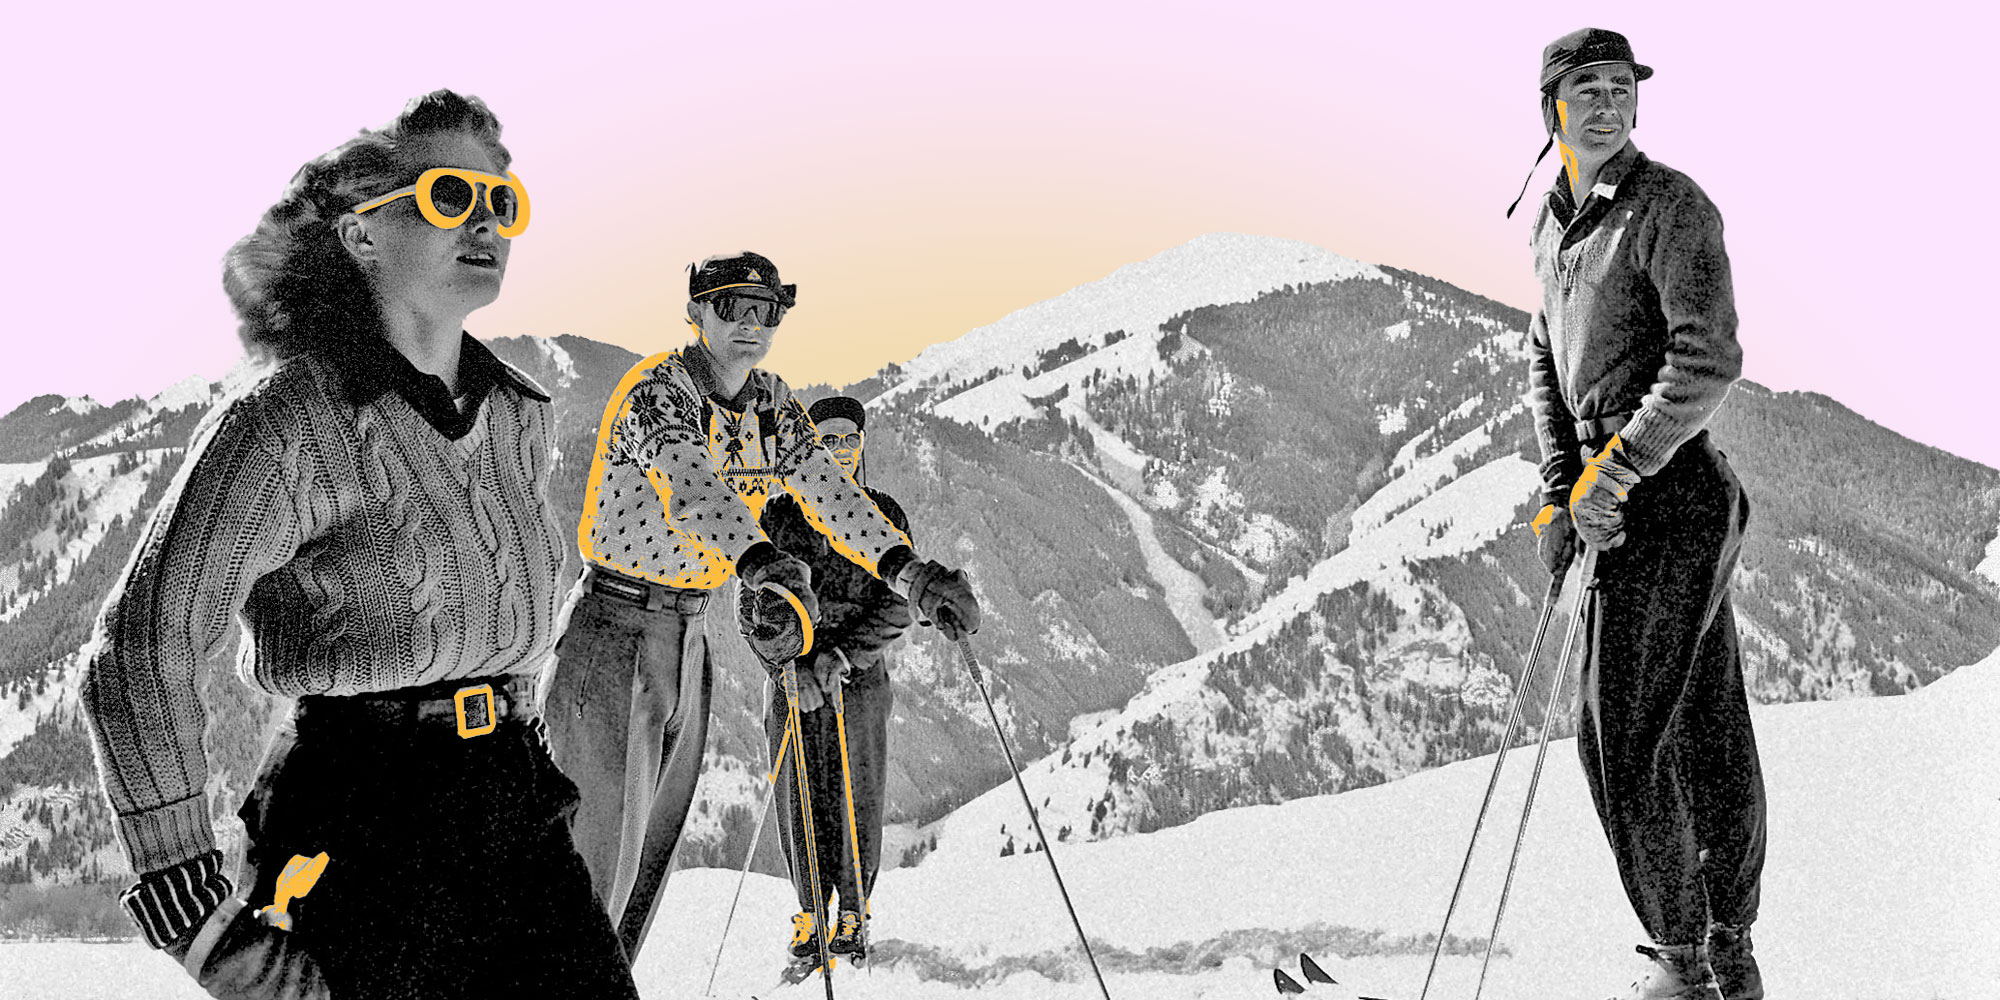 The Best Après-Ski Parties in America - OnTheSnow